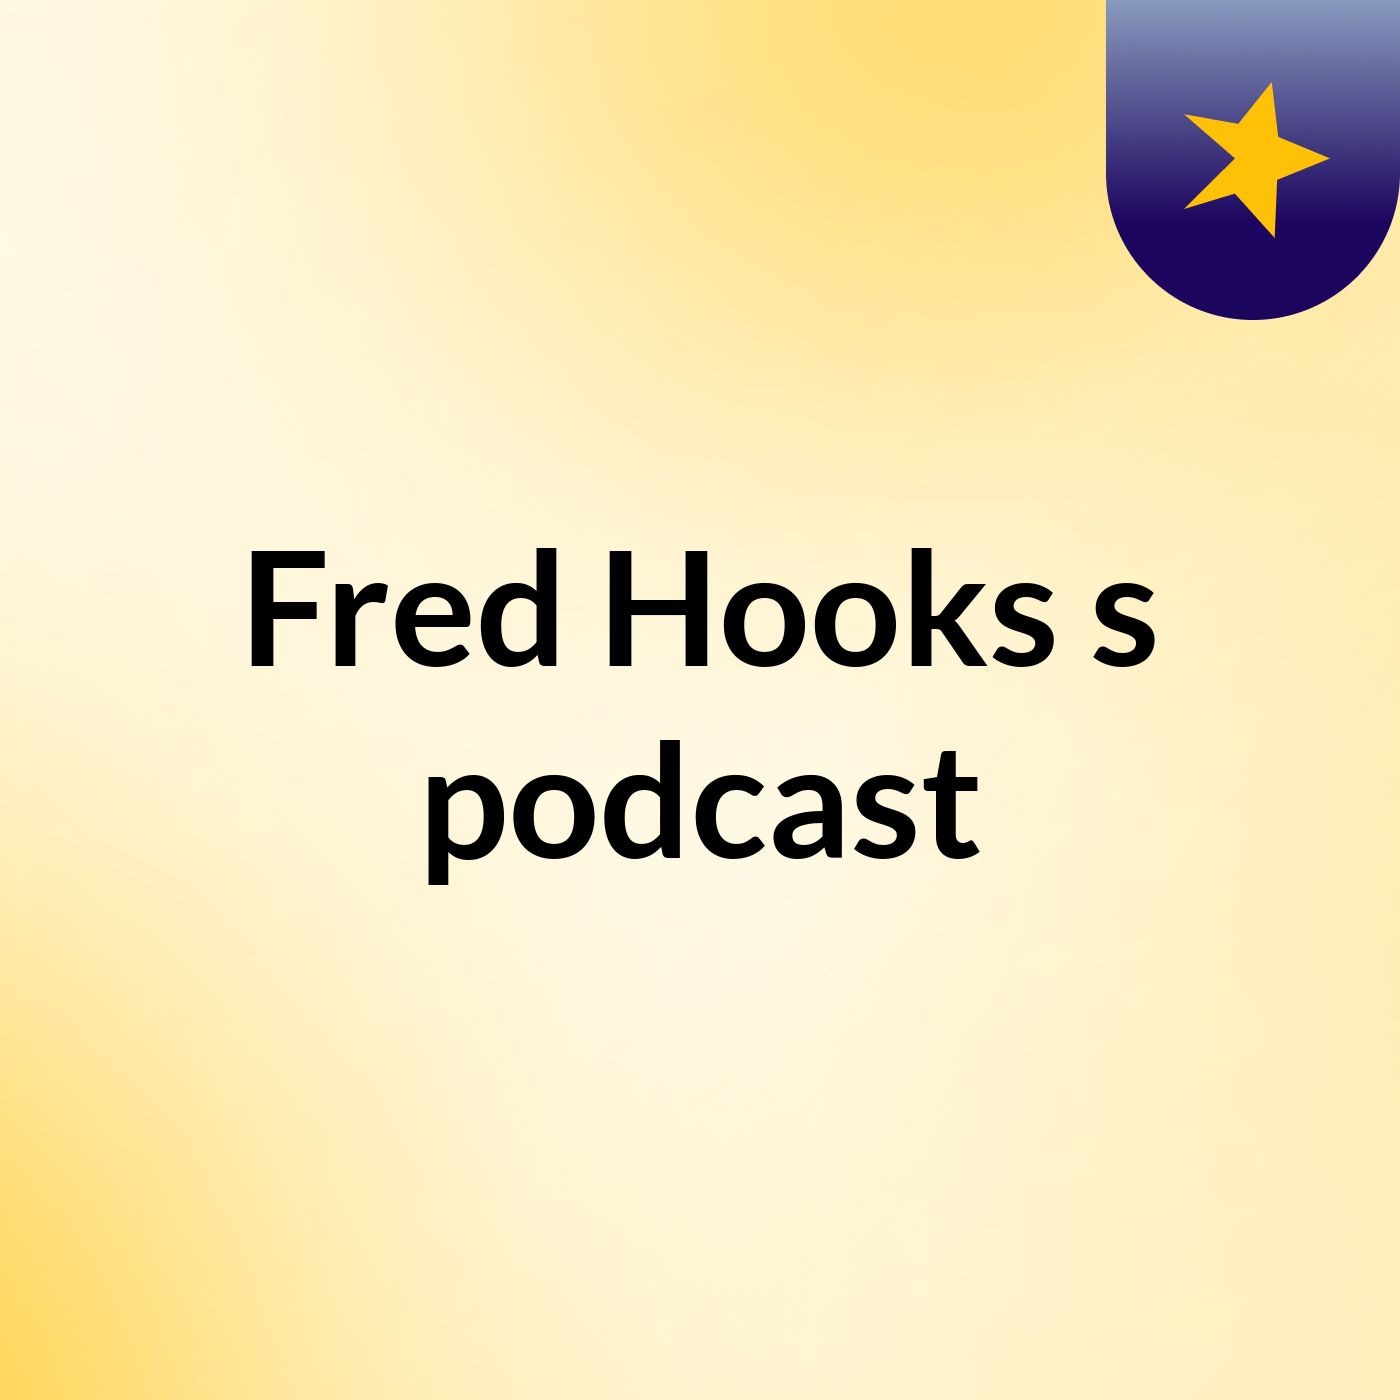 Episode 2 - Fred Hooks's podcast